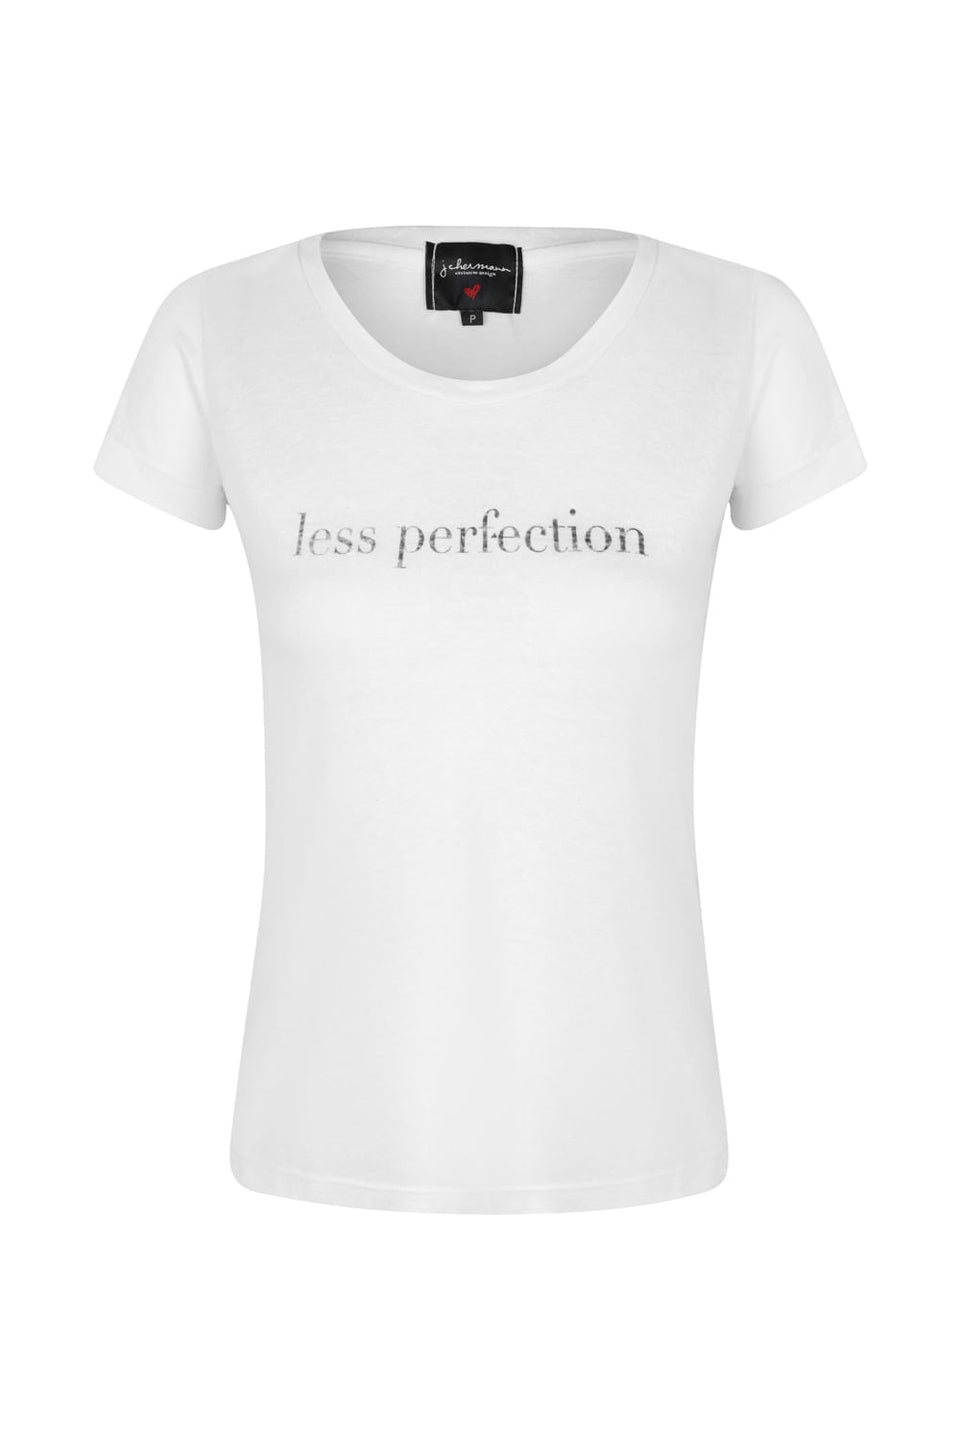 Camiseta less perfection Branco